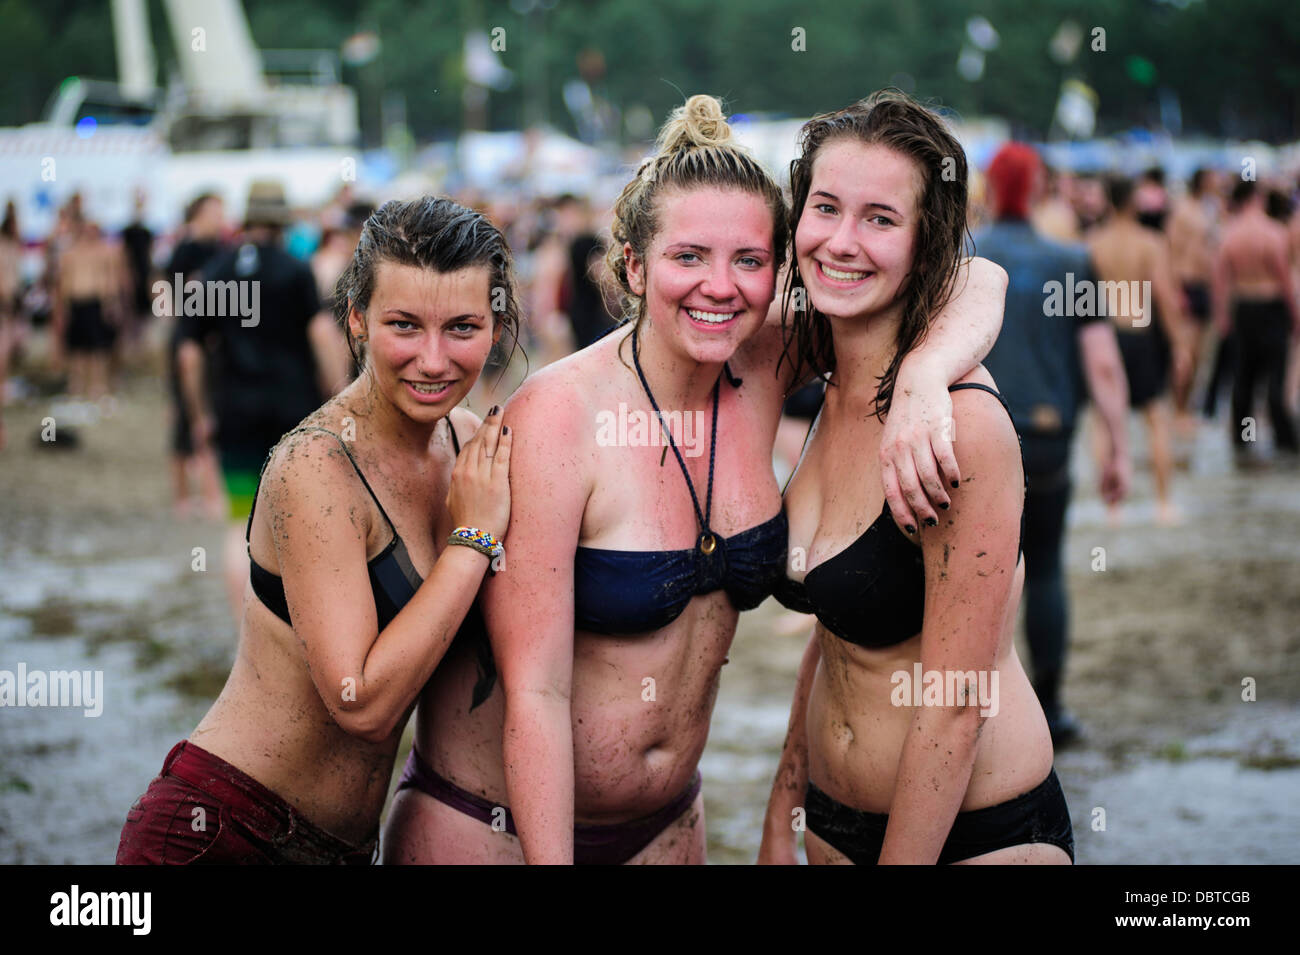 Junge Frauen haben Spaß in den Schlamm-Pool des Przystanek Woodstock Music Festival, Kostrzyn, Polen. Stockfoto